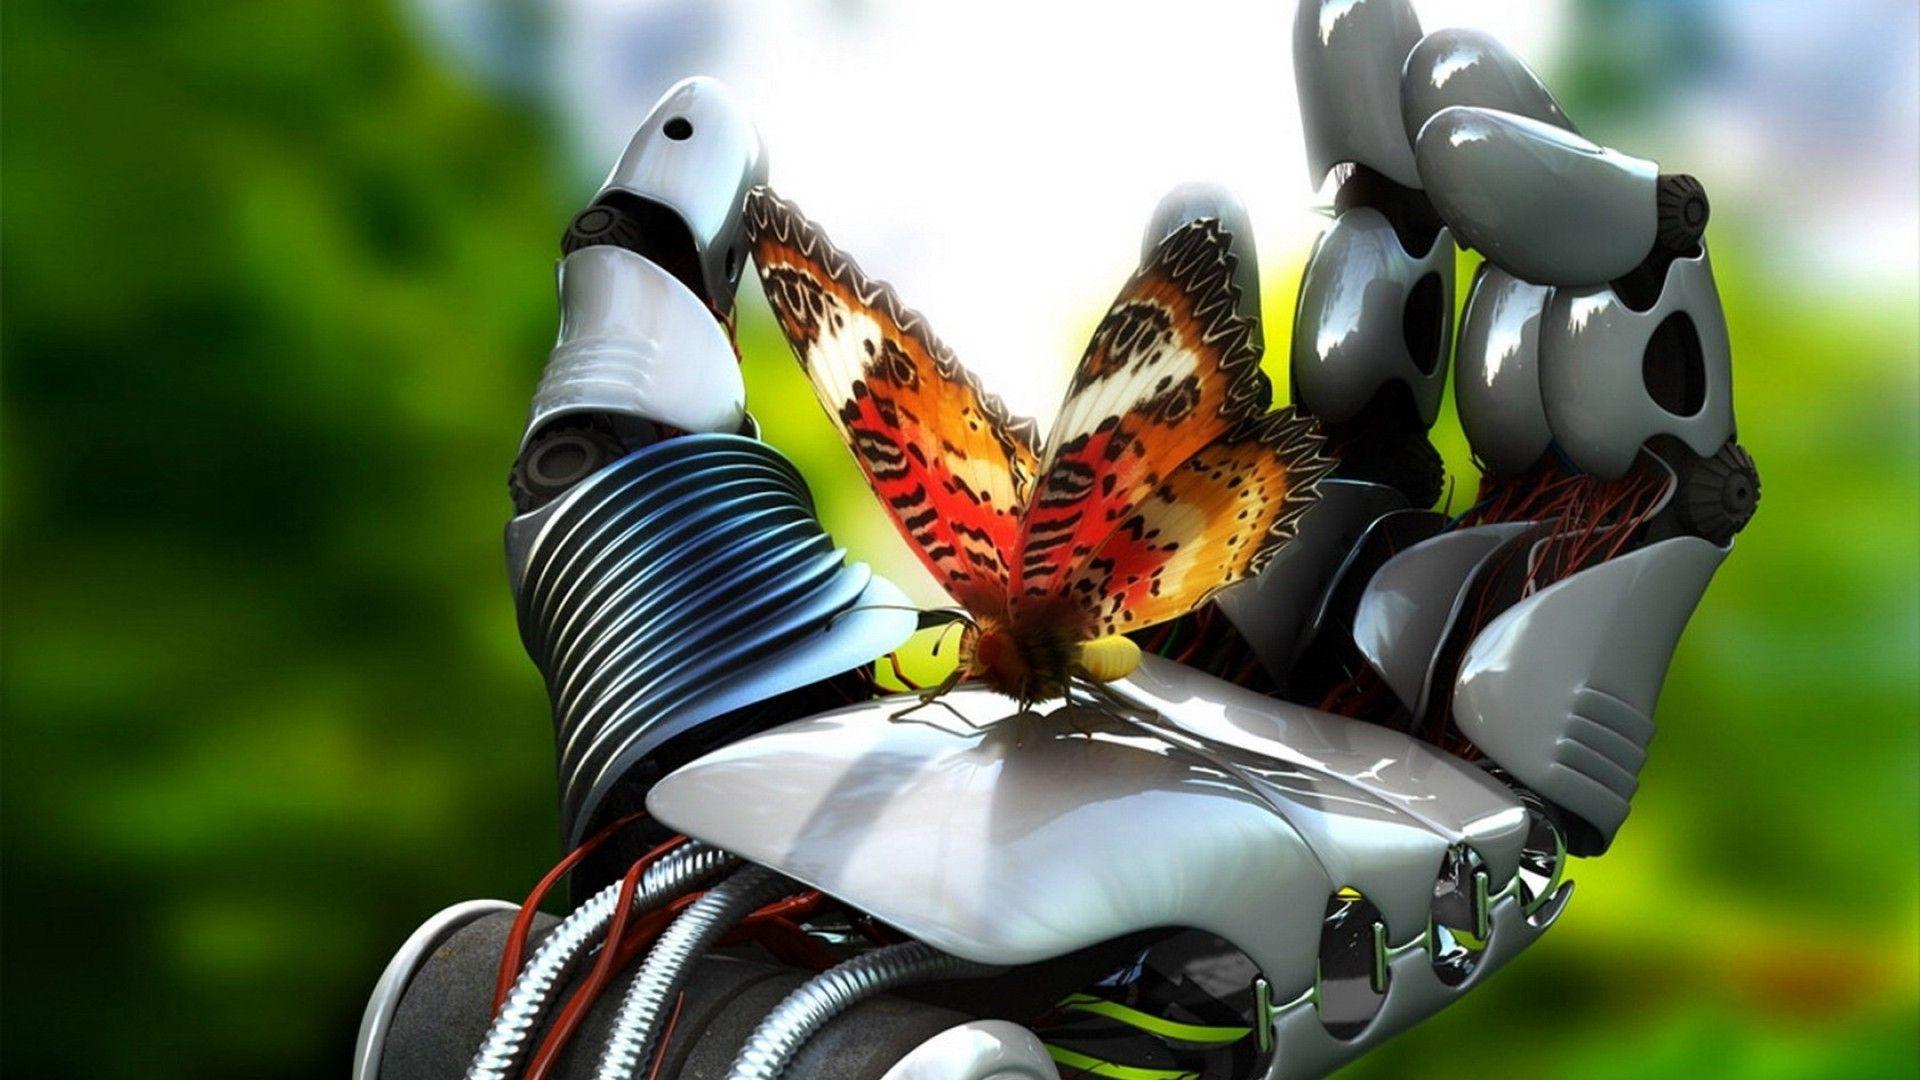 Robot Hand Butterfly 3D Wallpaper Image Full HD Free